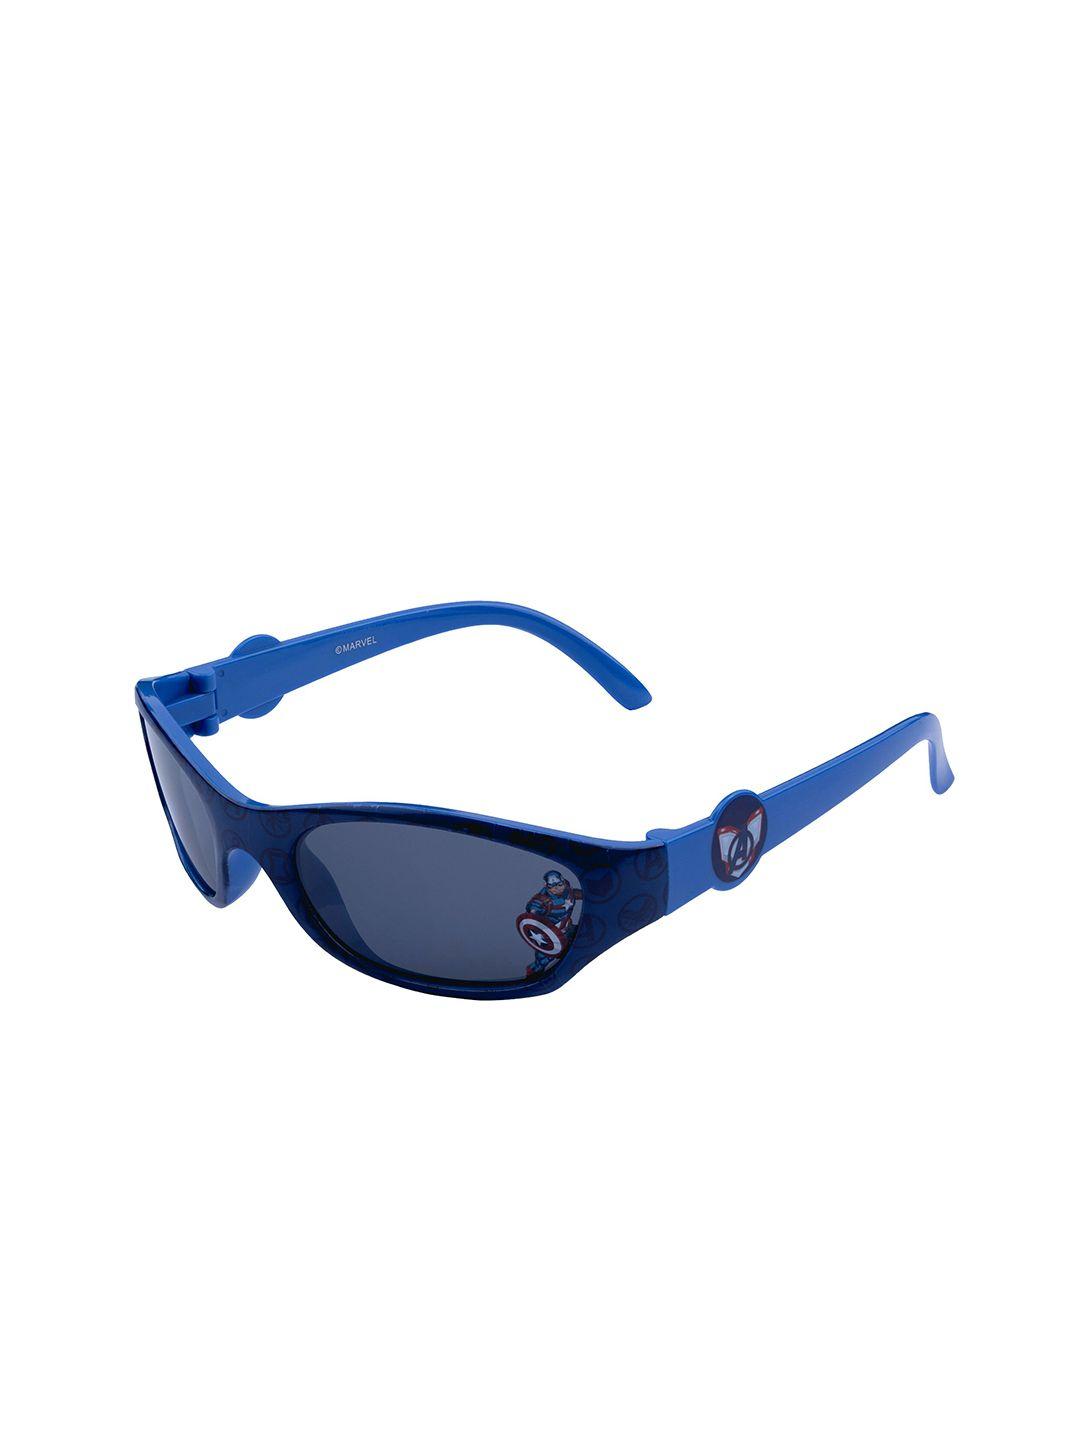 marvel-boys-grey-lens-&-blue-rectangle-sunglasses-with-polarized-&-uv-protected-lens